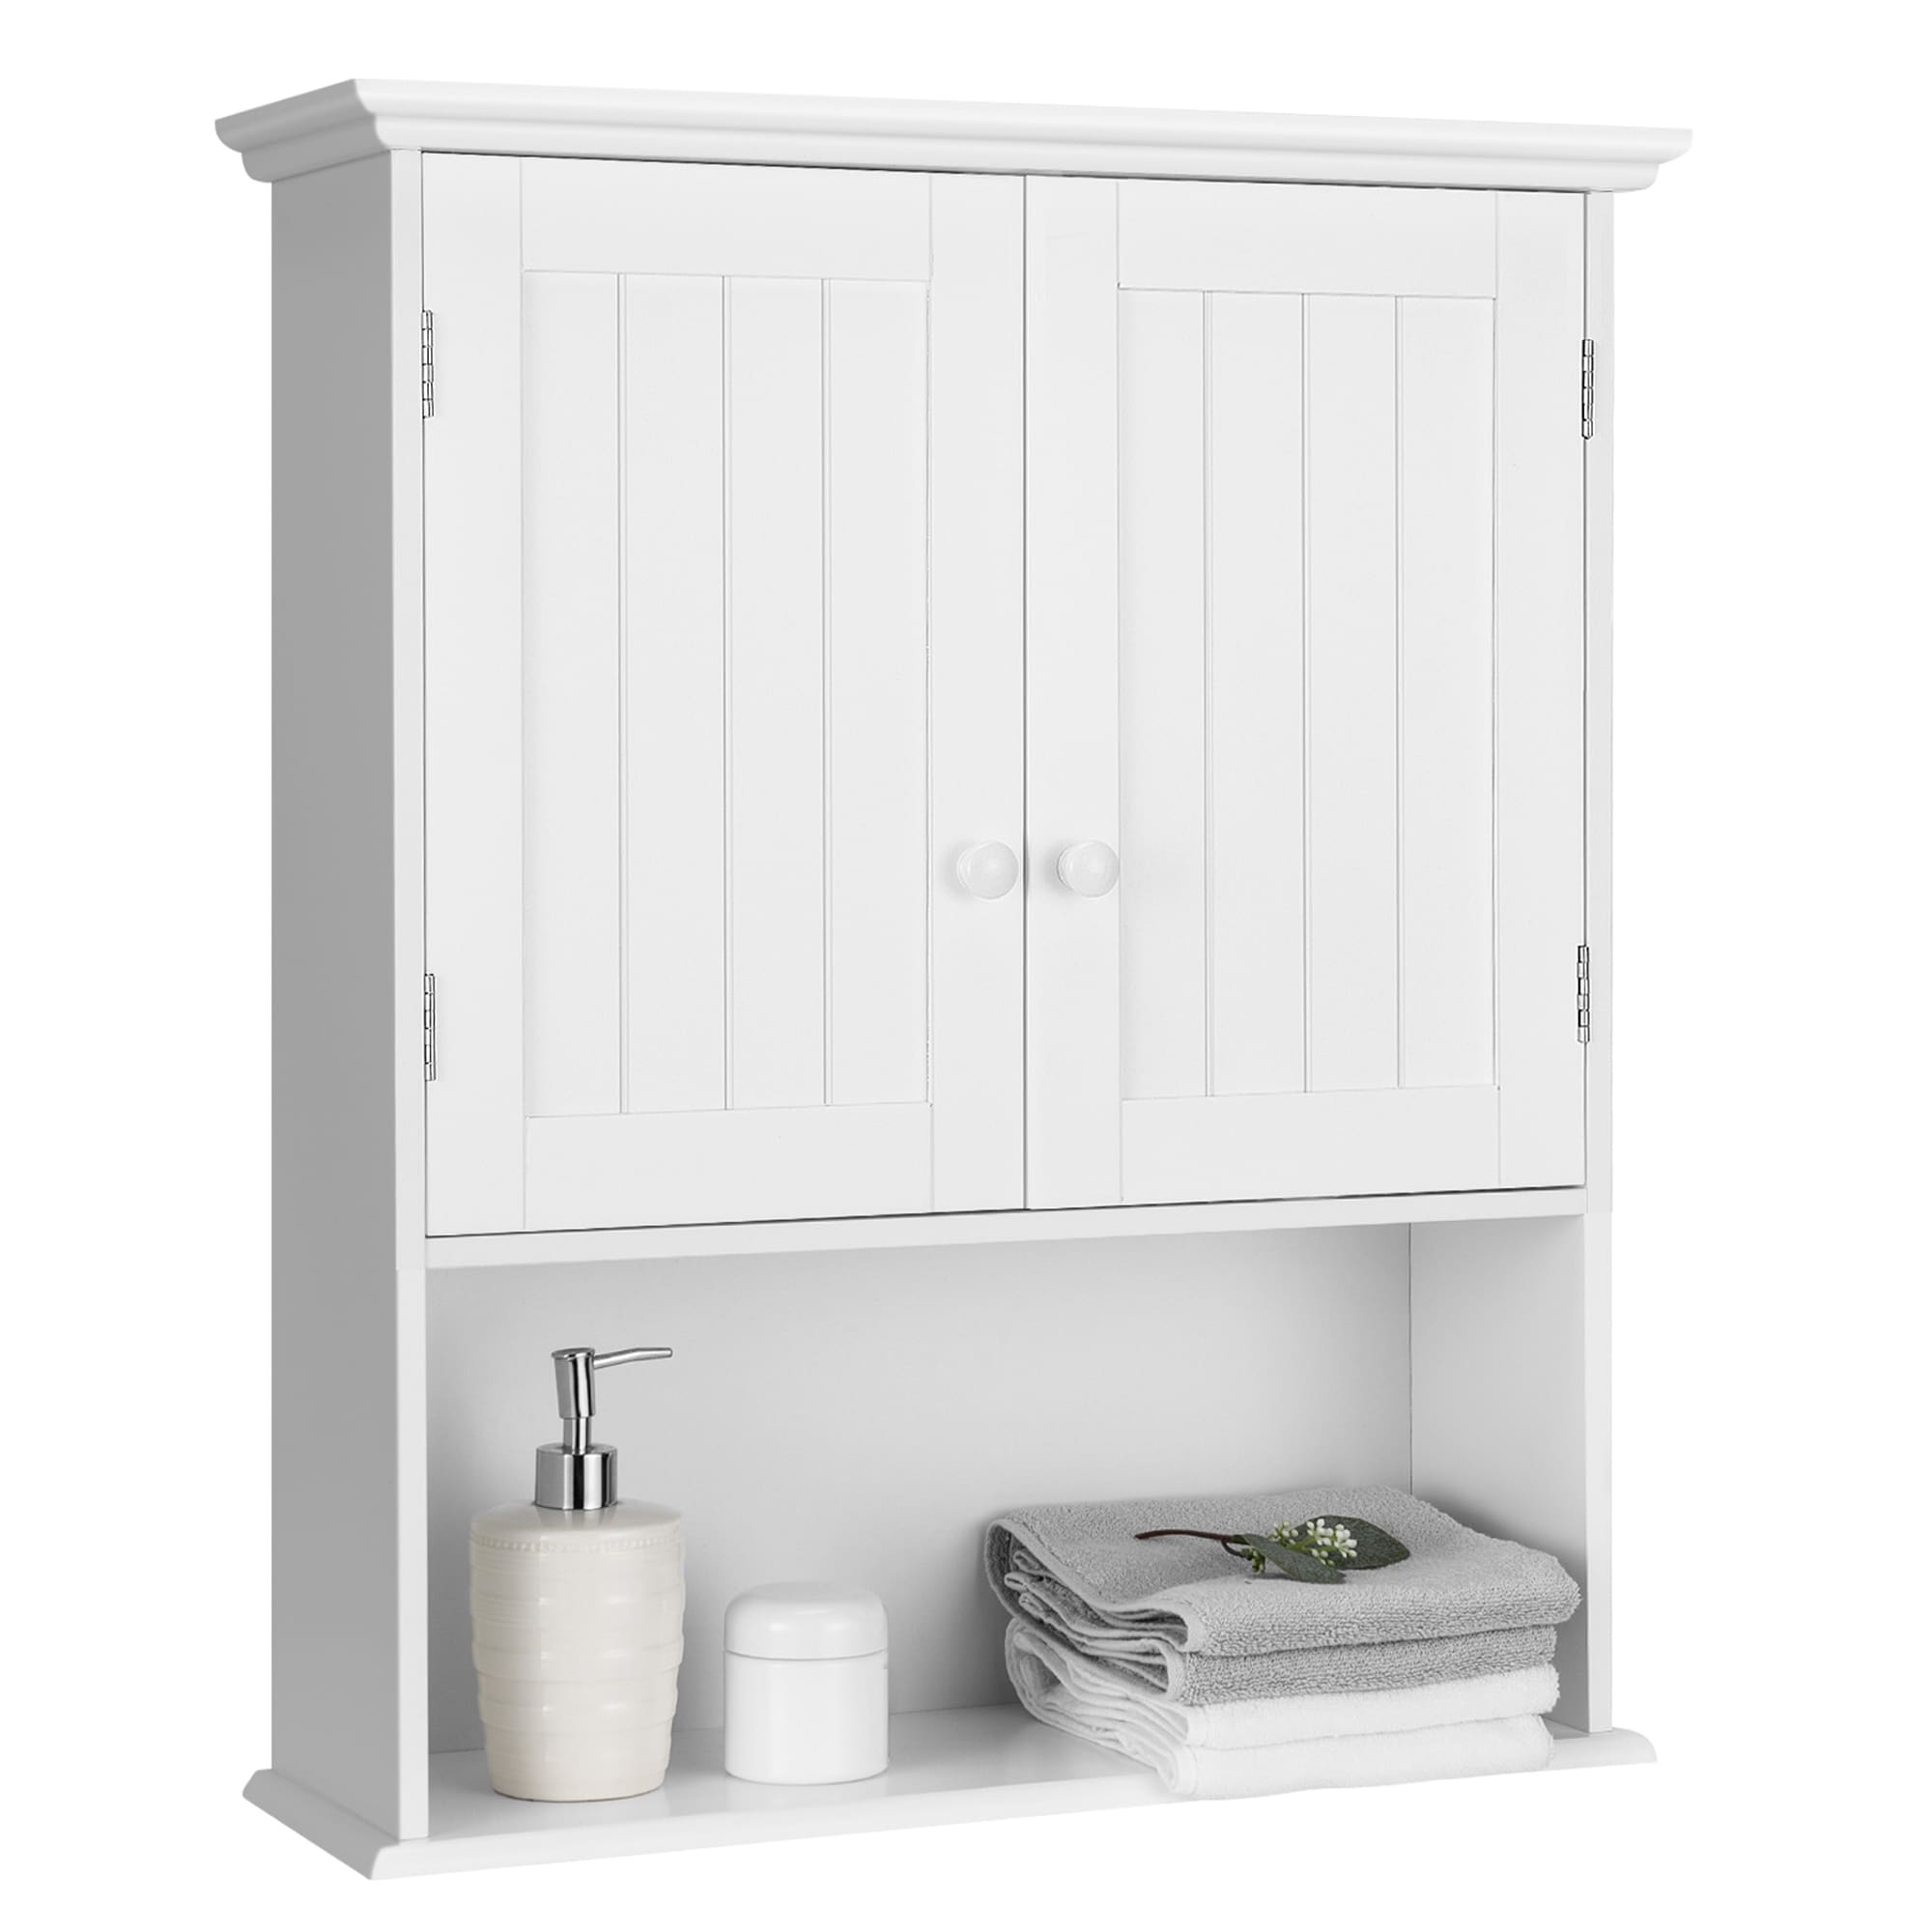 https://ak1.ostkcdn.com/images/products/is/images/direct/21c852753fab312dee37f4f719c0478bac2559d2/Costway-Wall-Mount-Bathroom-Cabinet-Storage-Organizer-Medicine-Cabinet.jpg